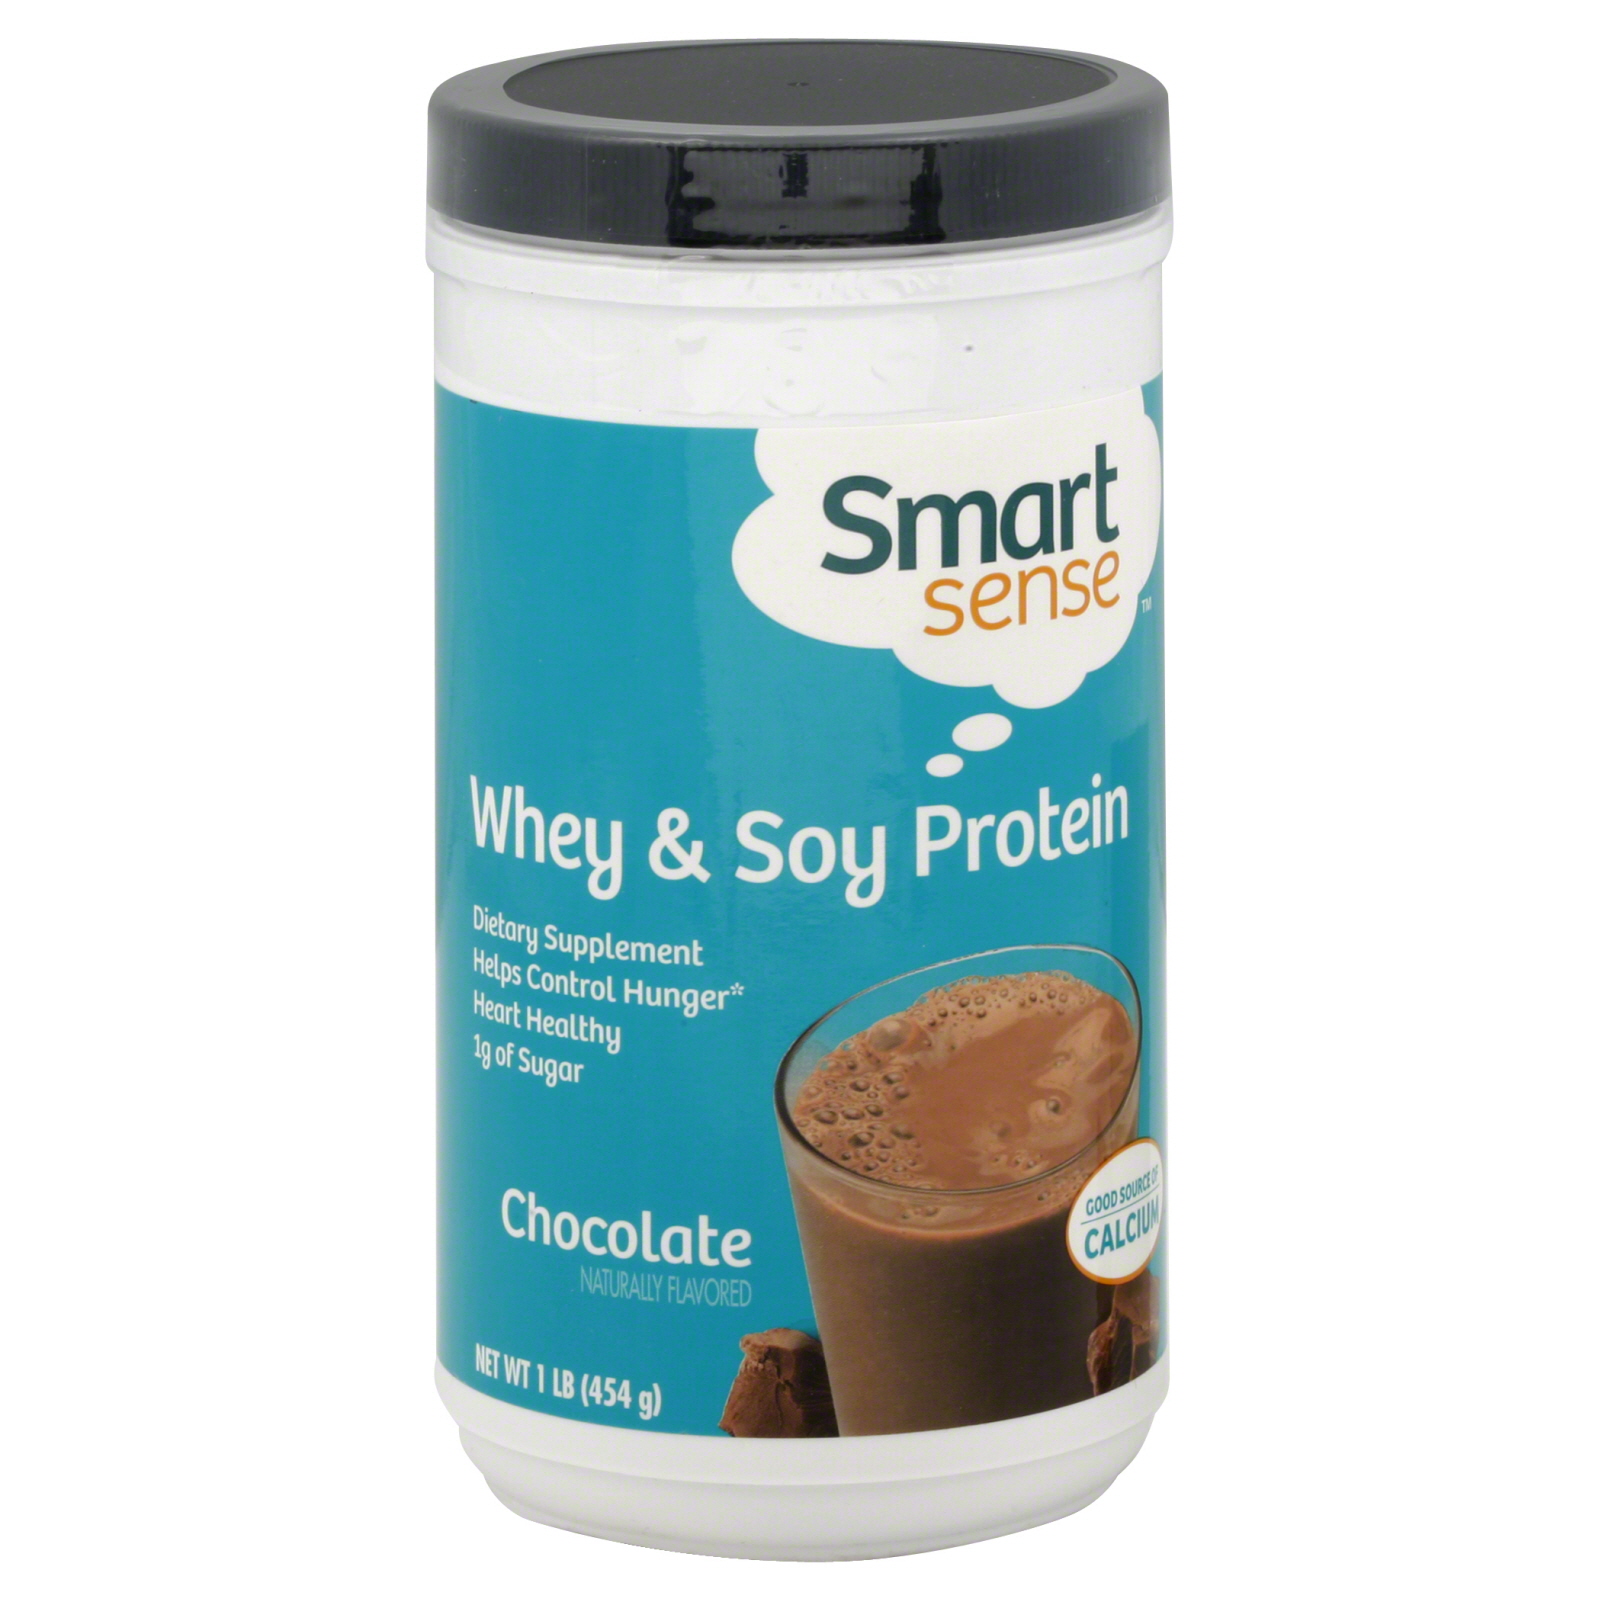 Smart Sense Whey & Soy Protein, Chocolate, 1 lb (454 g)